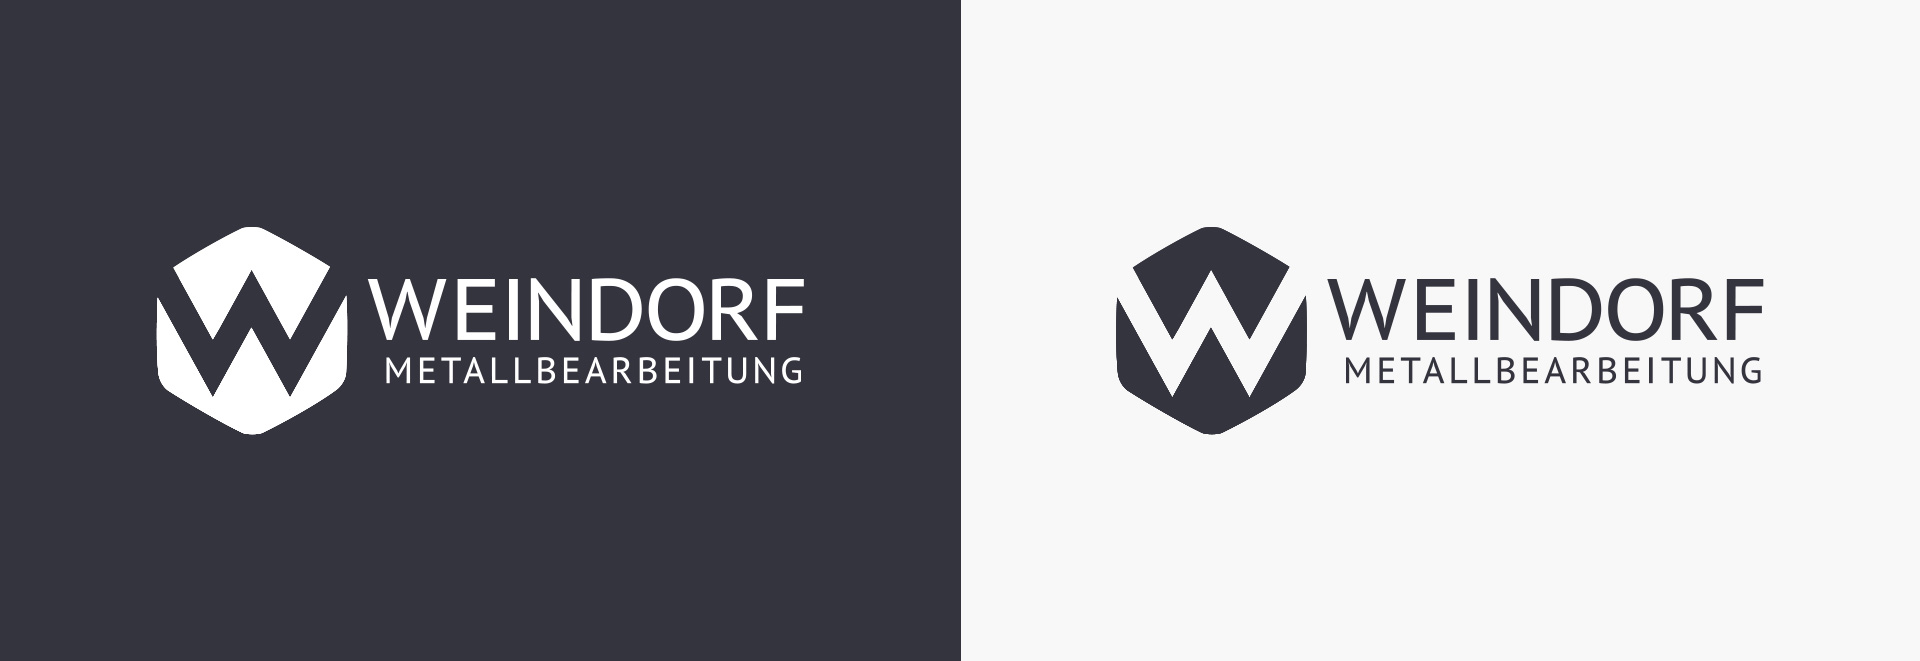 Weindorf black and white logo